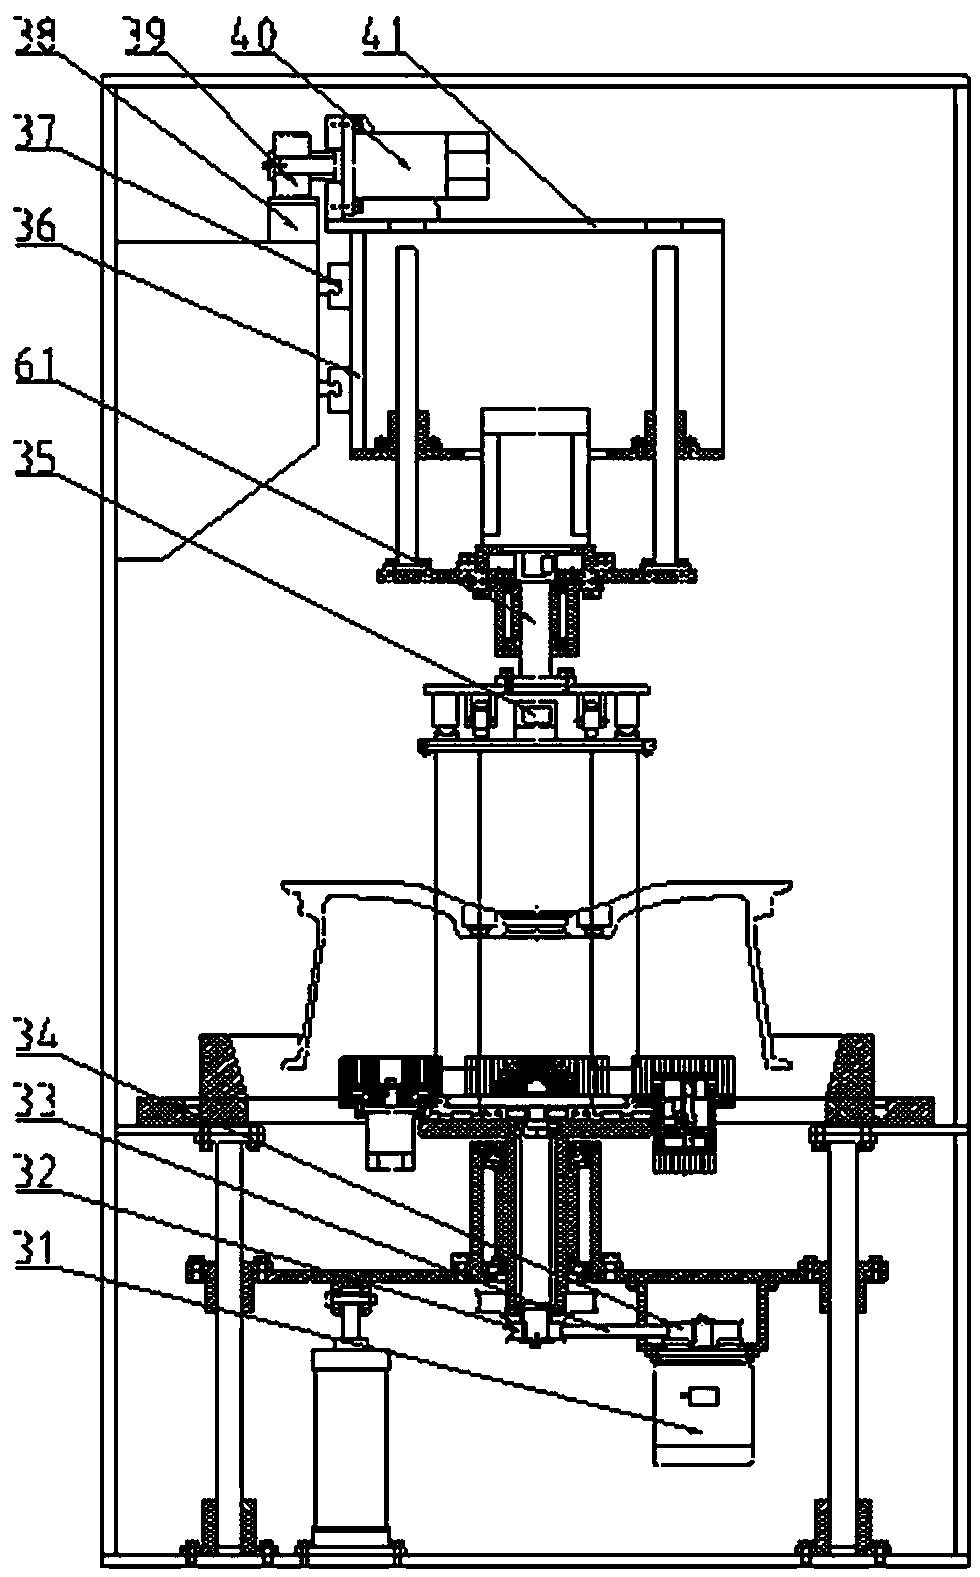 A wheel back chamber deburring device